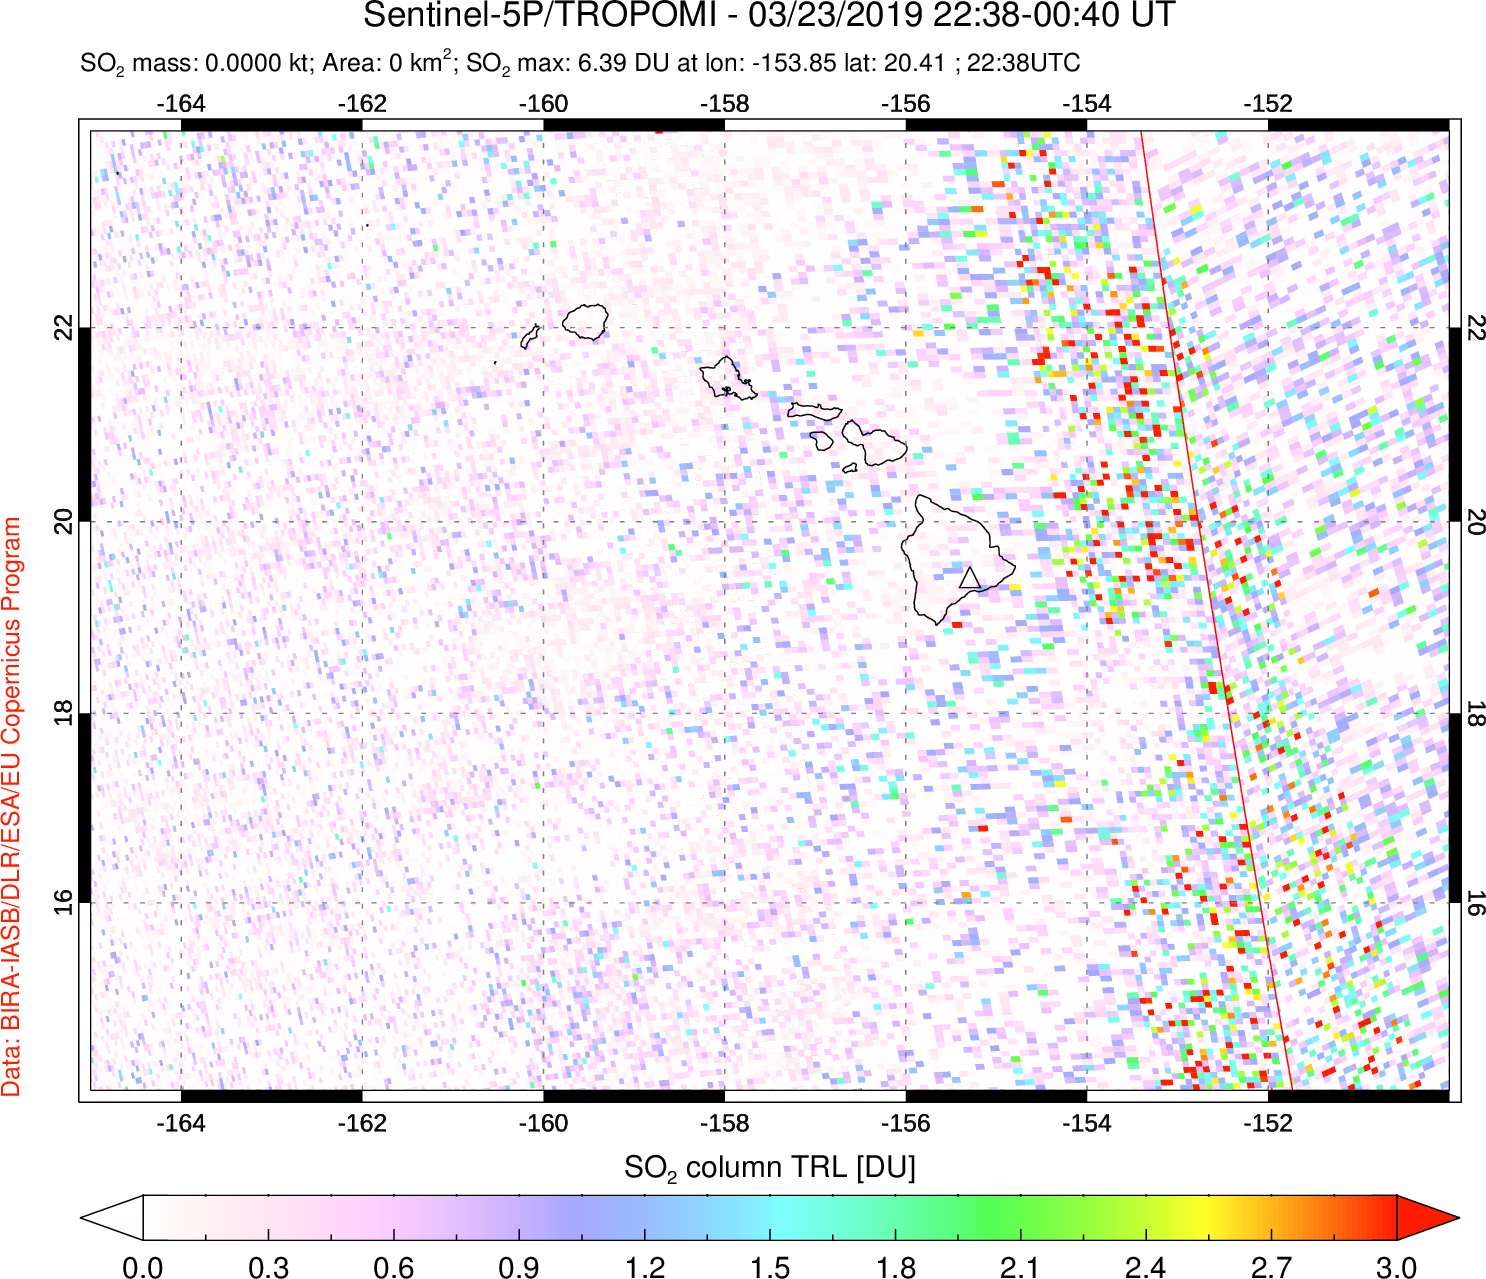 A sulfur dioxide image over Hawaii, USA on Mar 23, 2019.